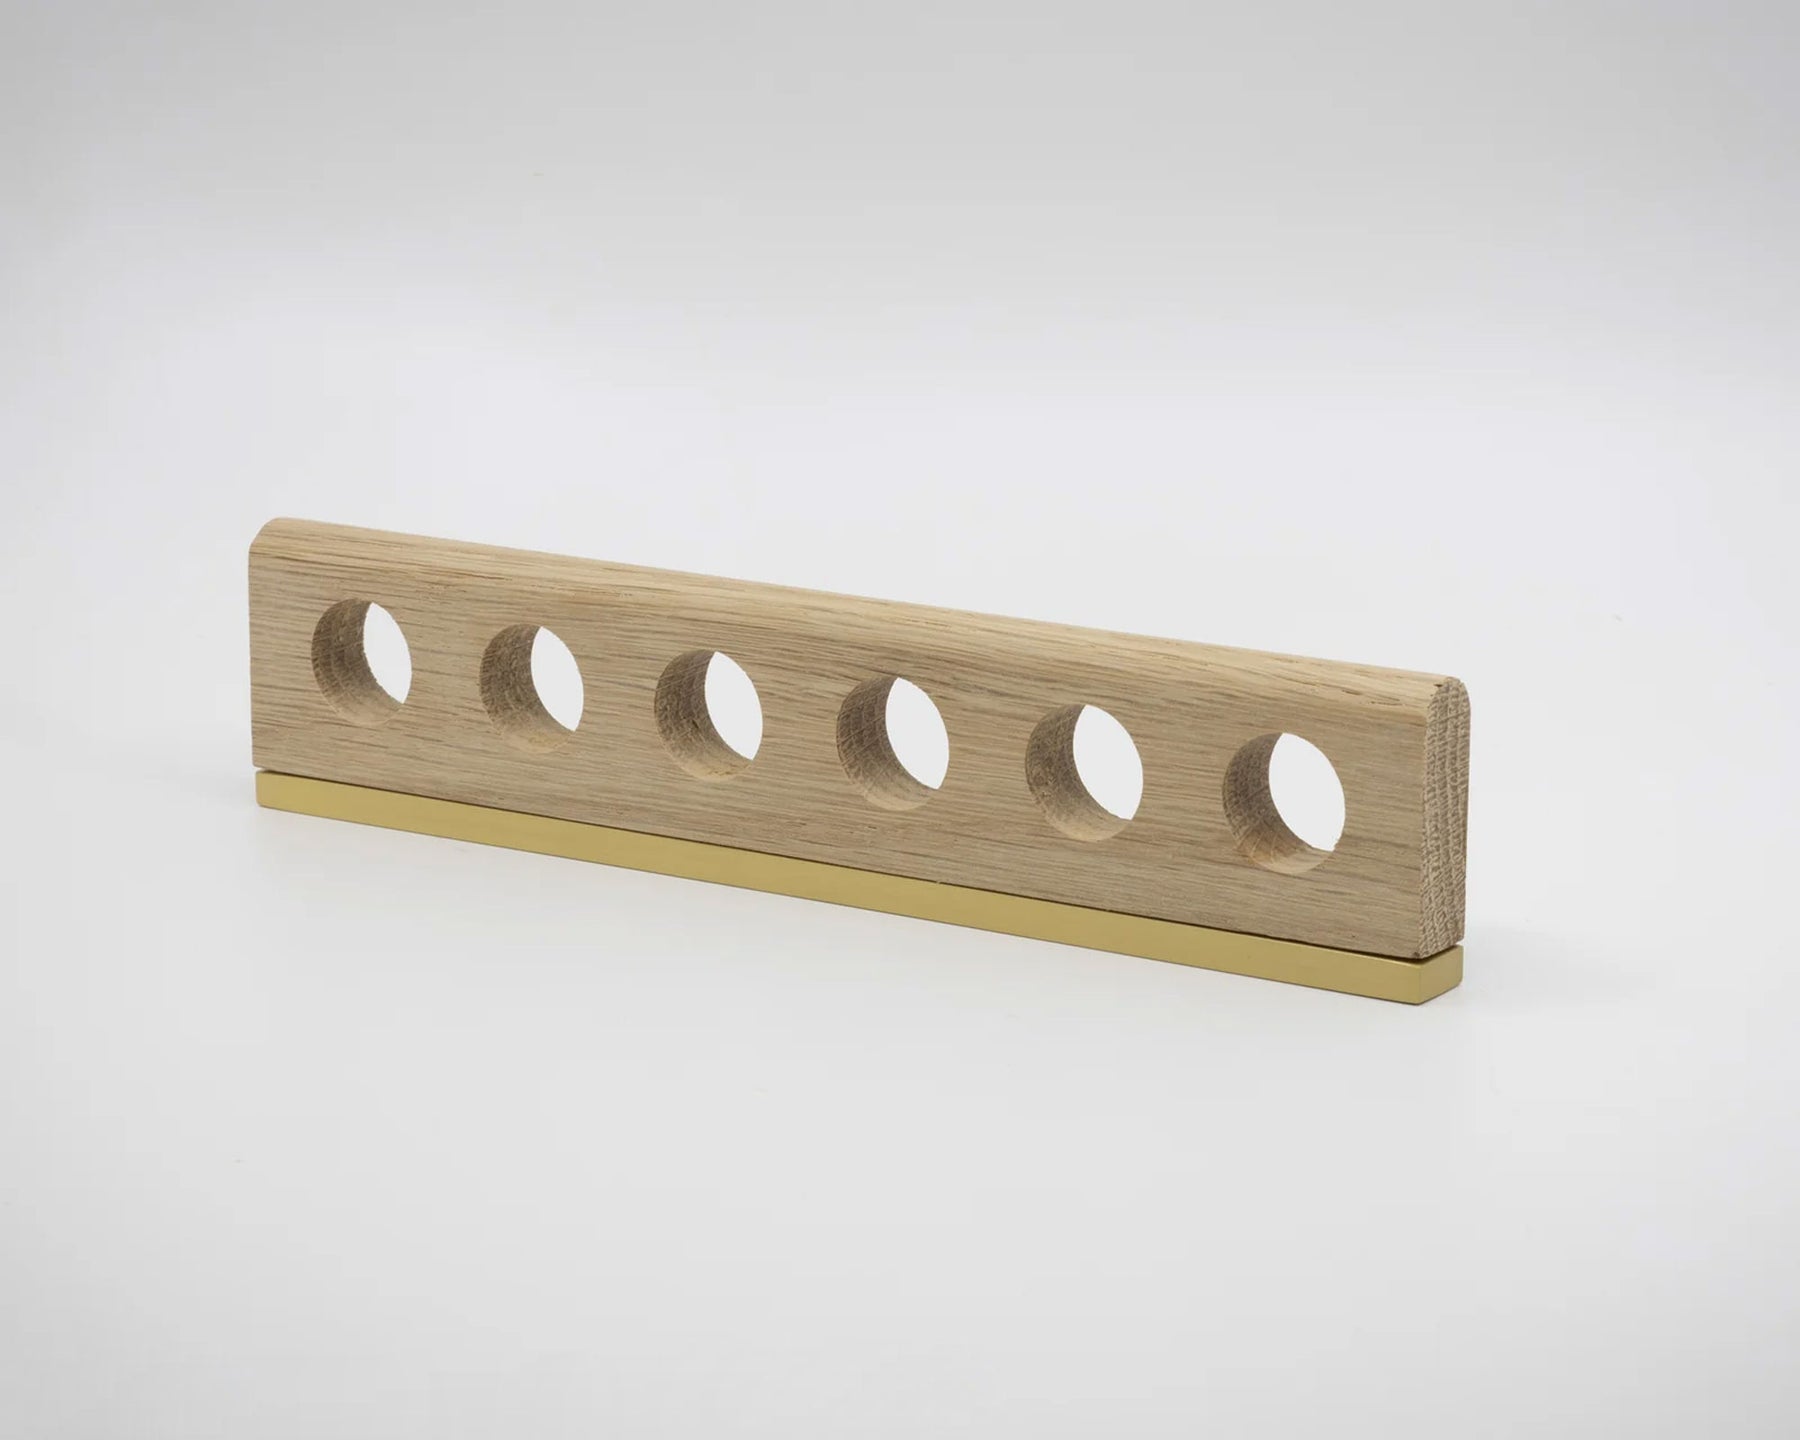 Wood & Brass Cabinet Hardware | DSHOP